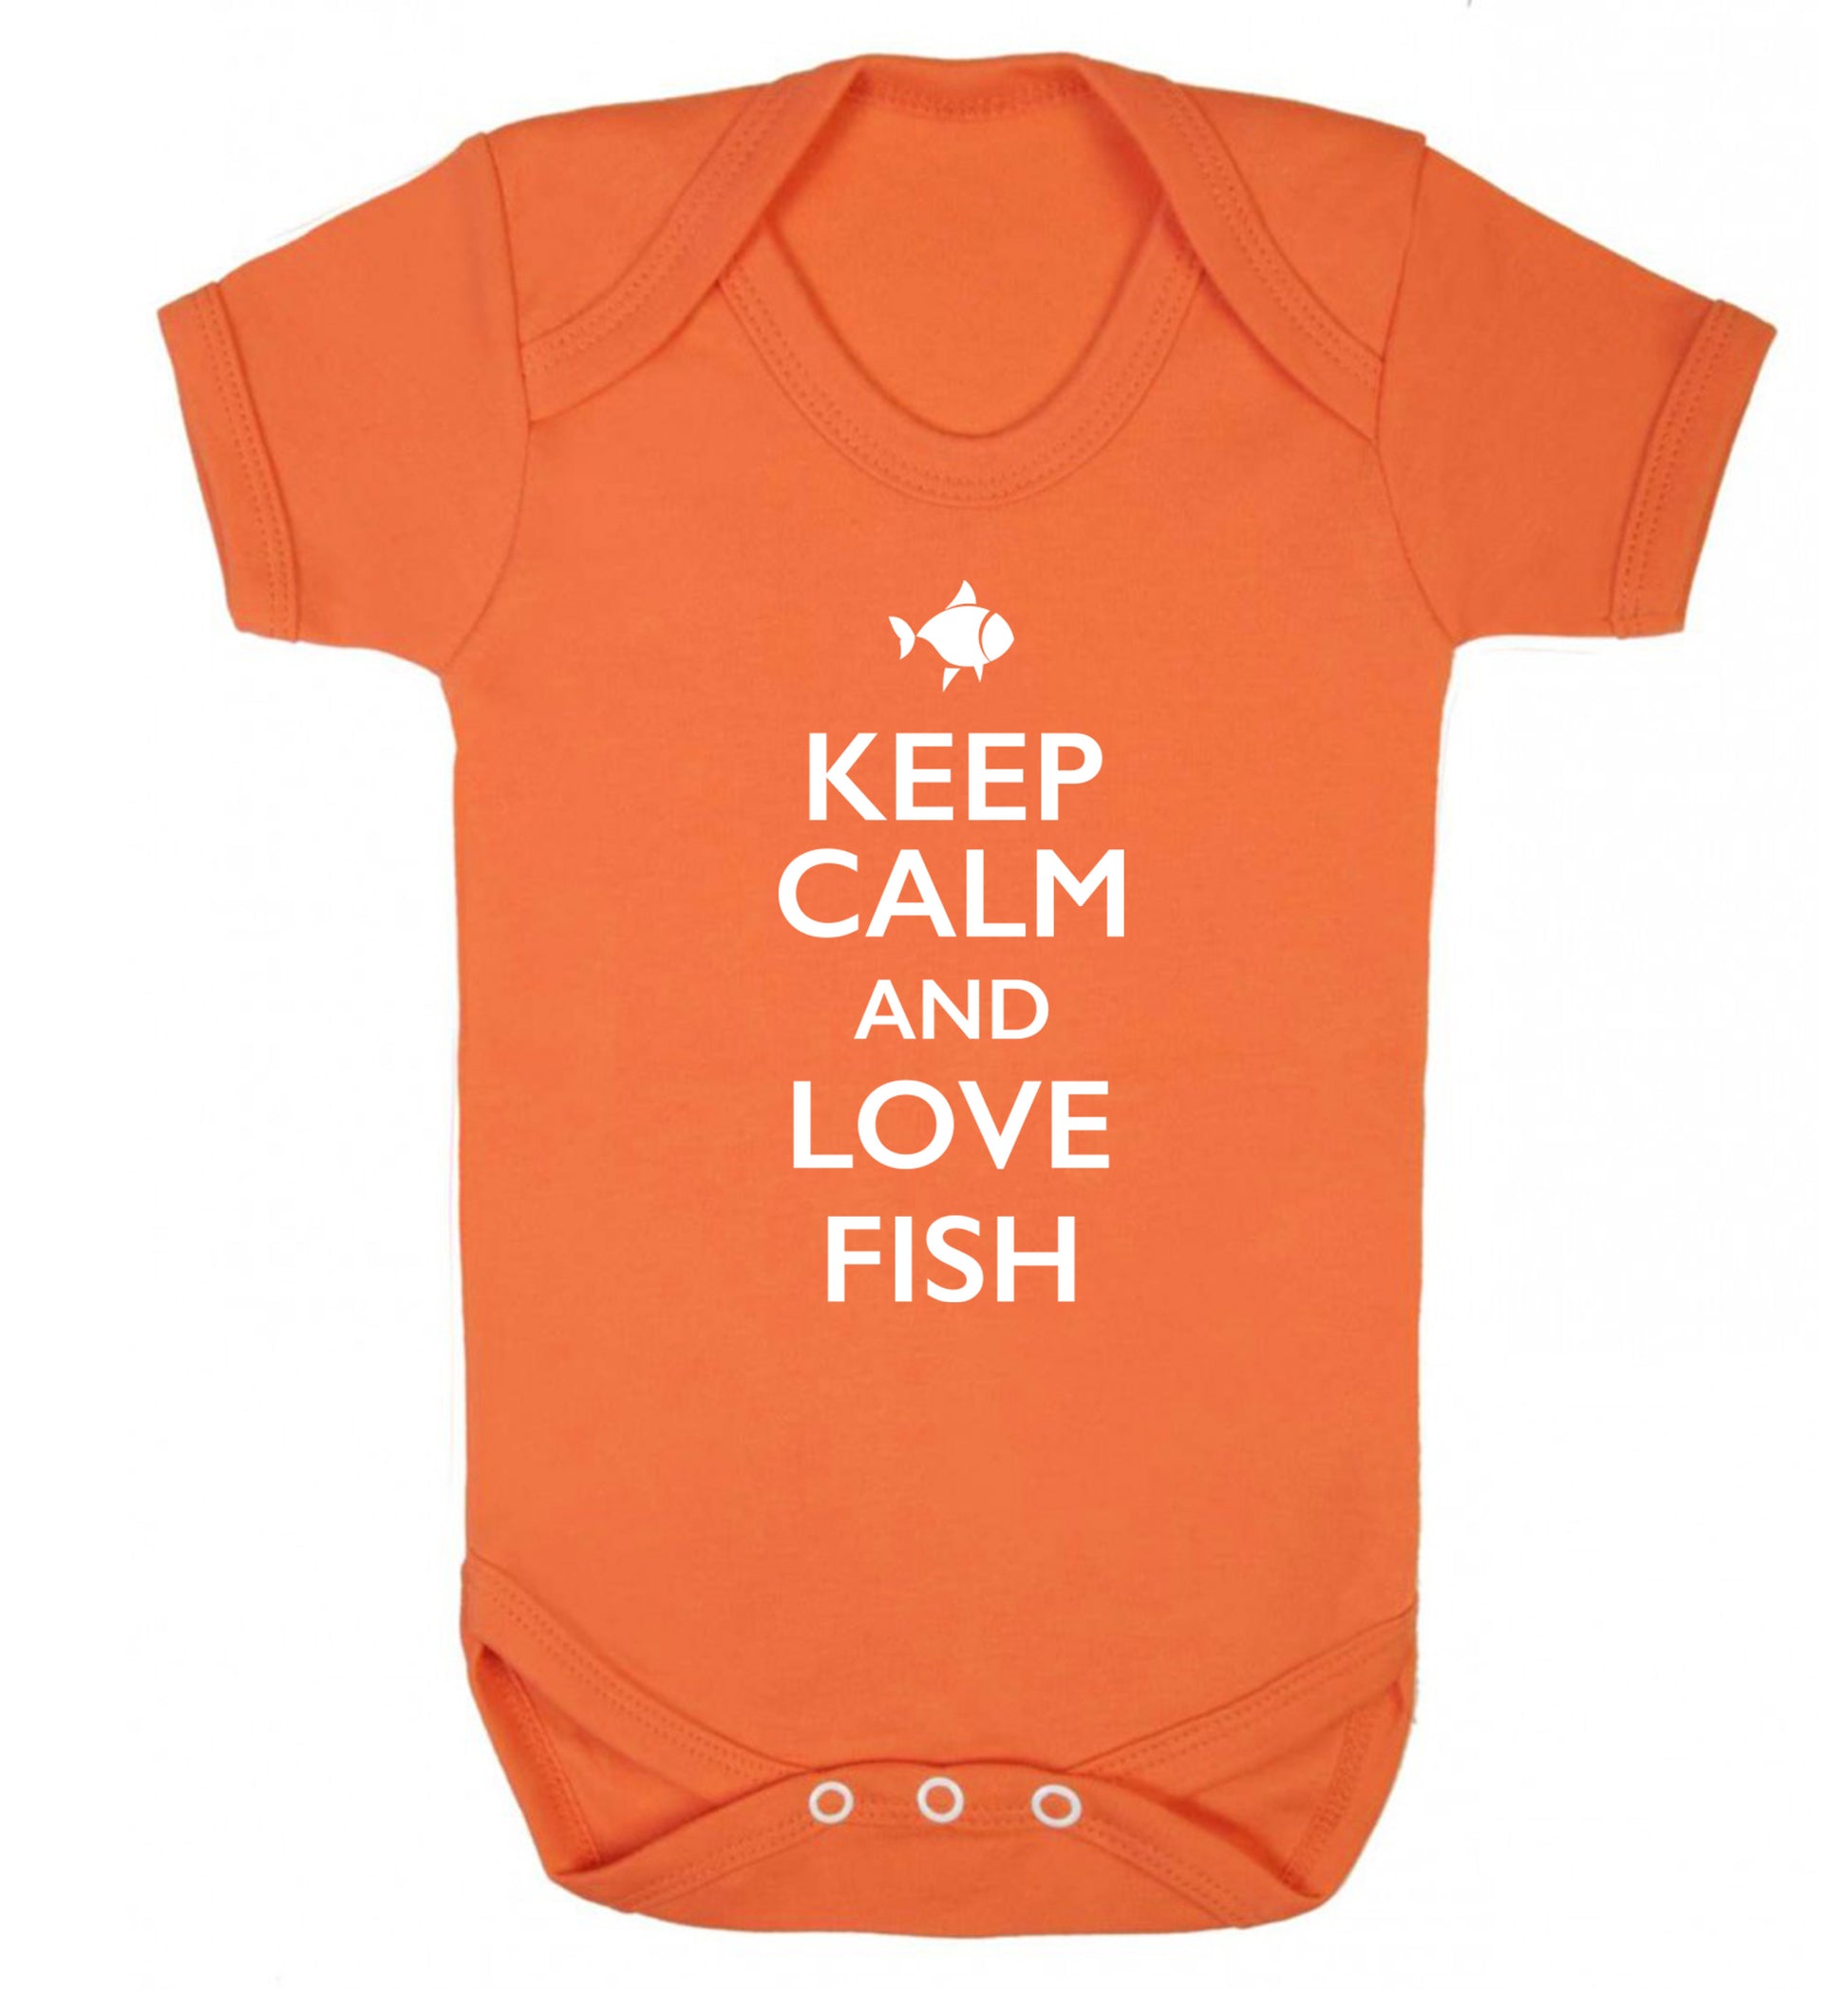 Keep calm and love fish Baby Vest orange 18-24 months